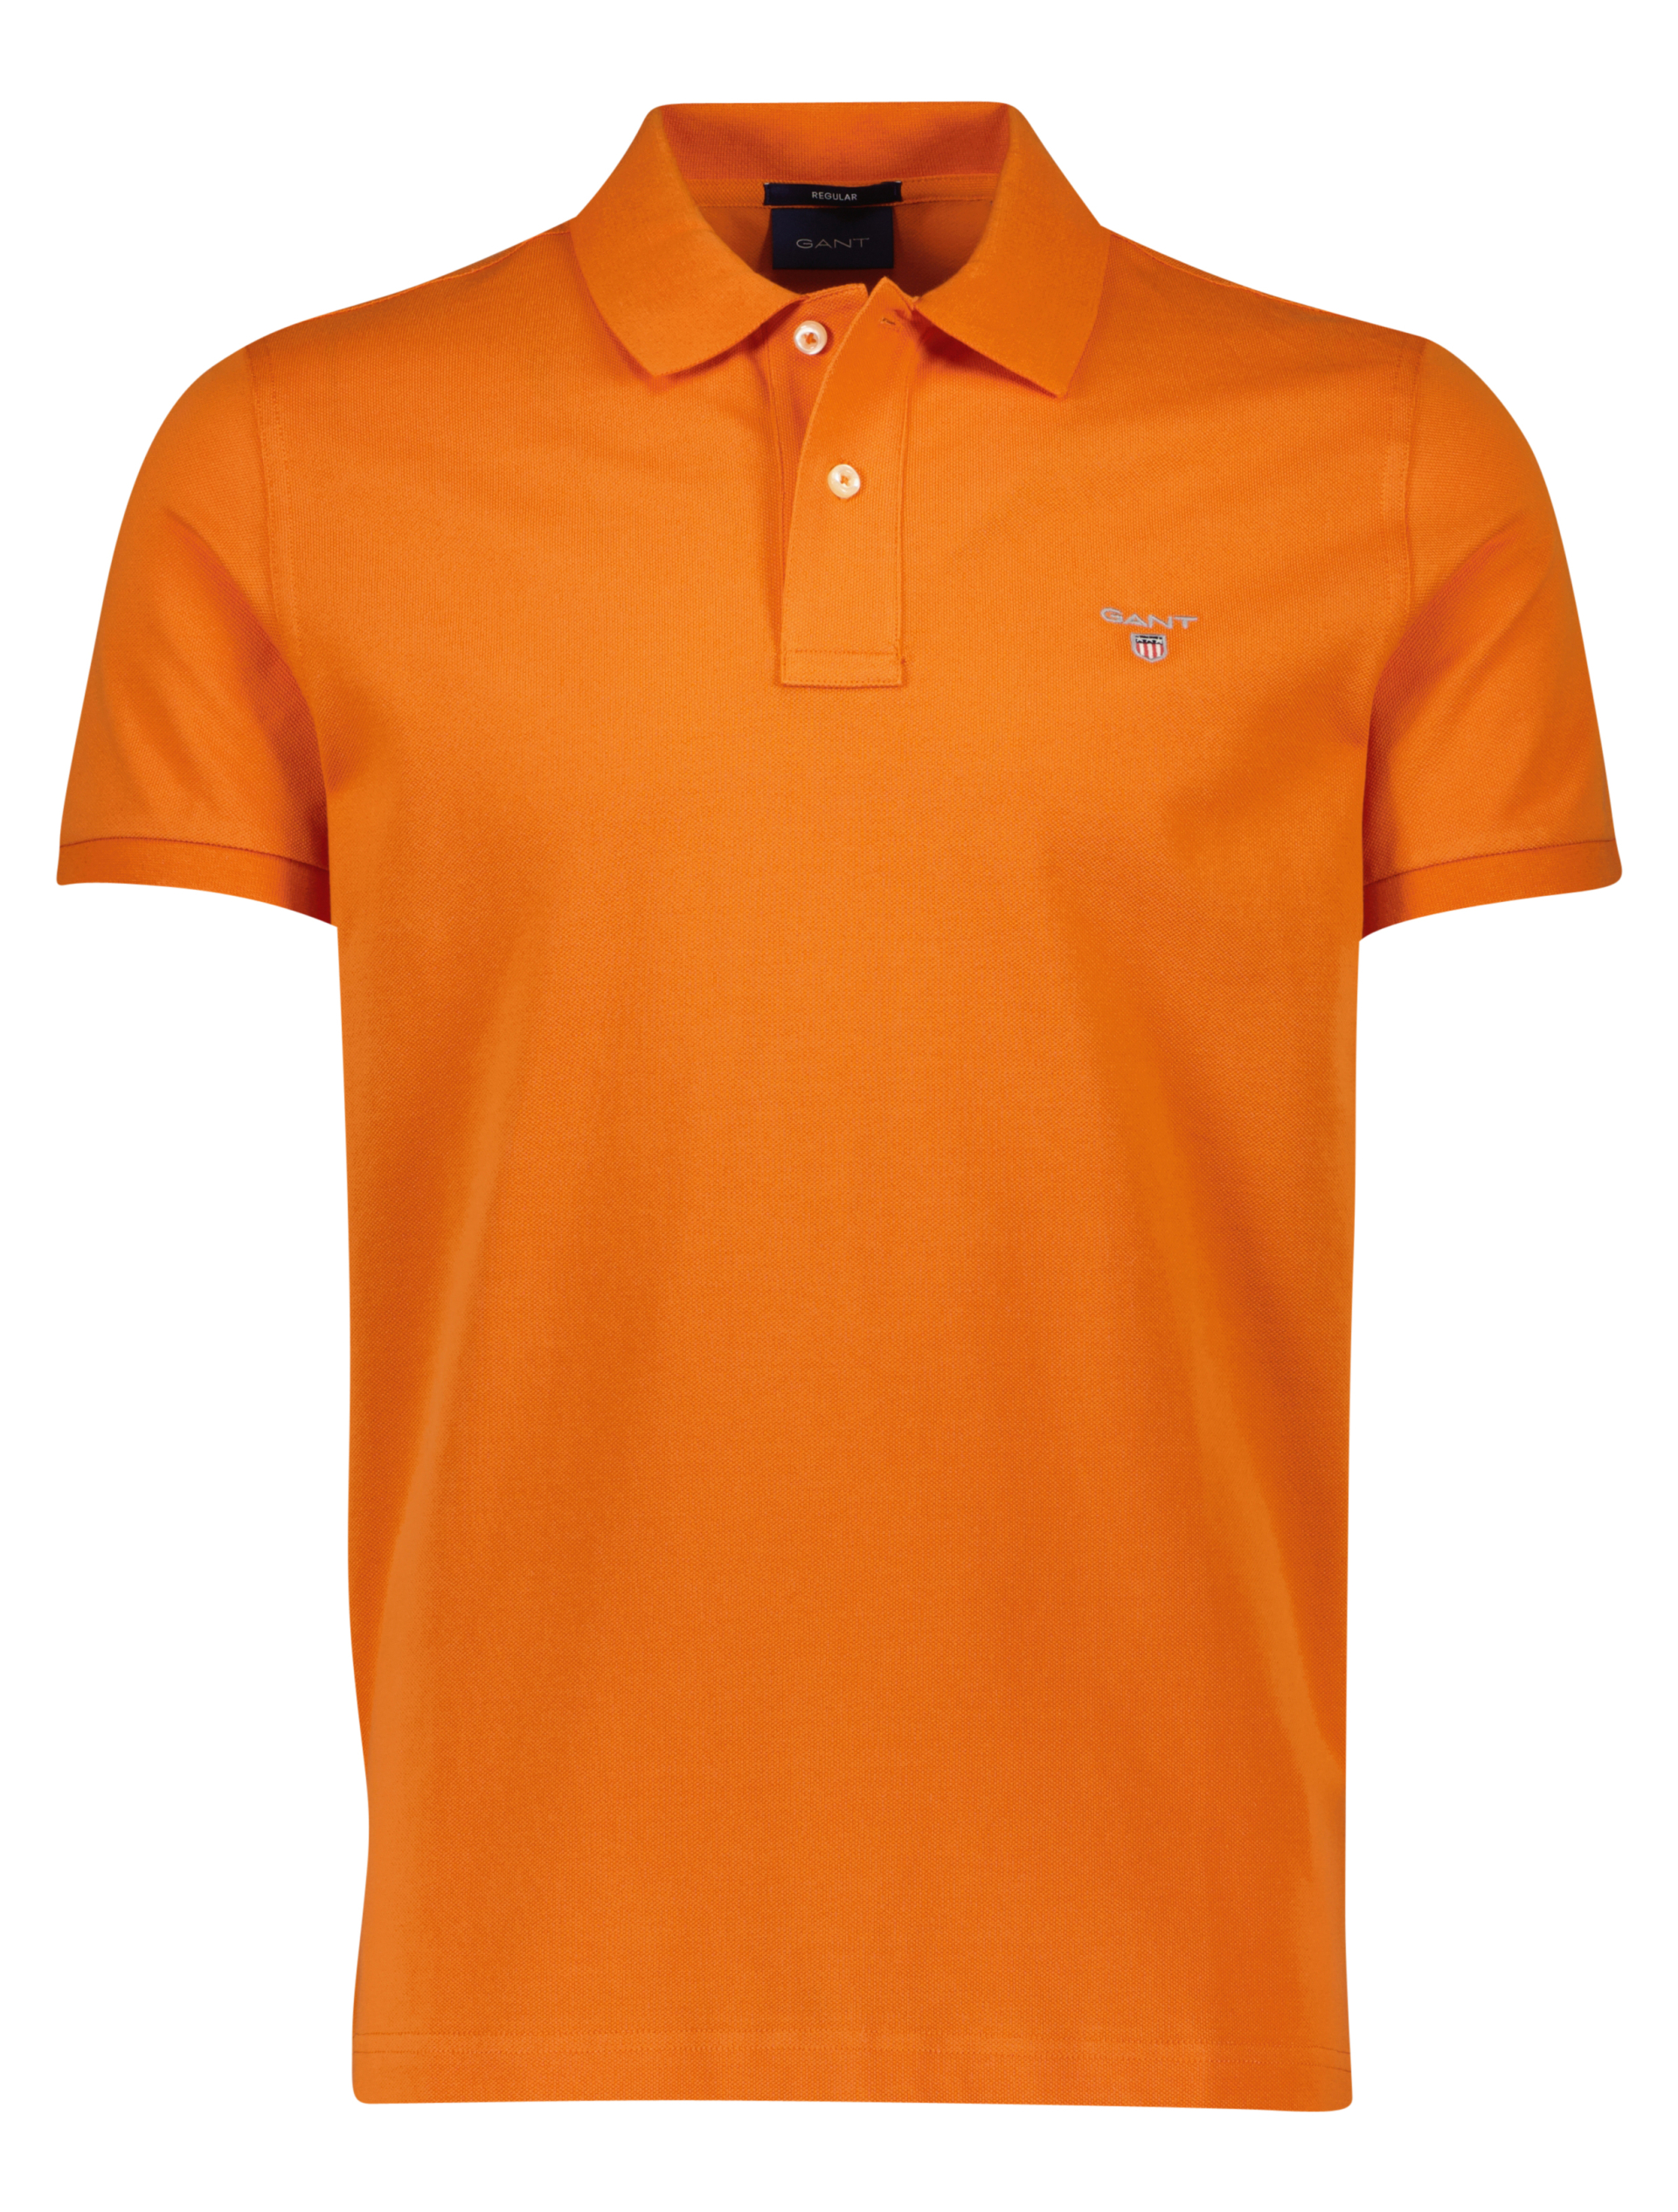 Gant Poloshirt orange / 860 pumpkin orange